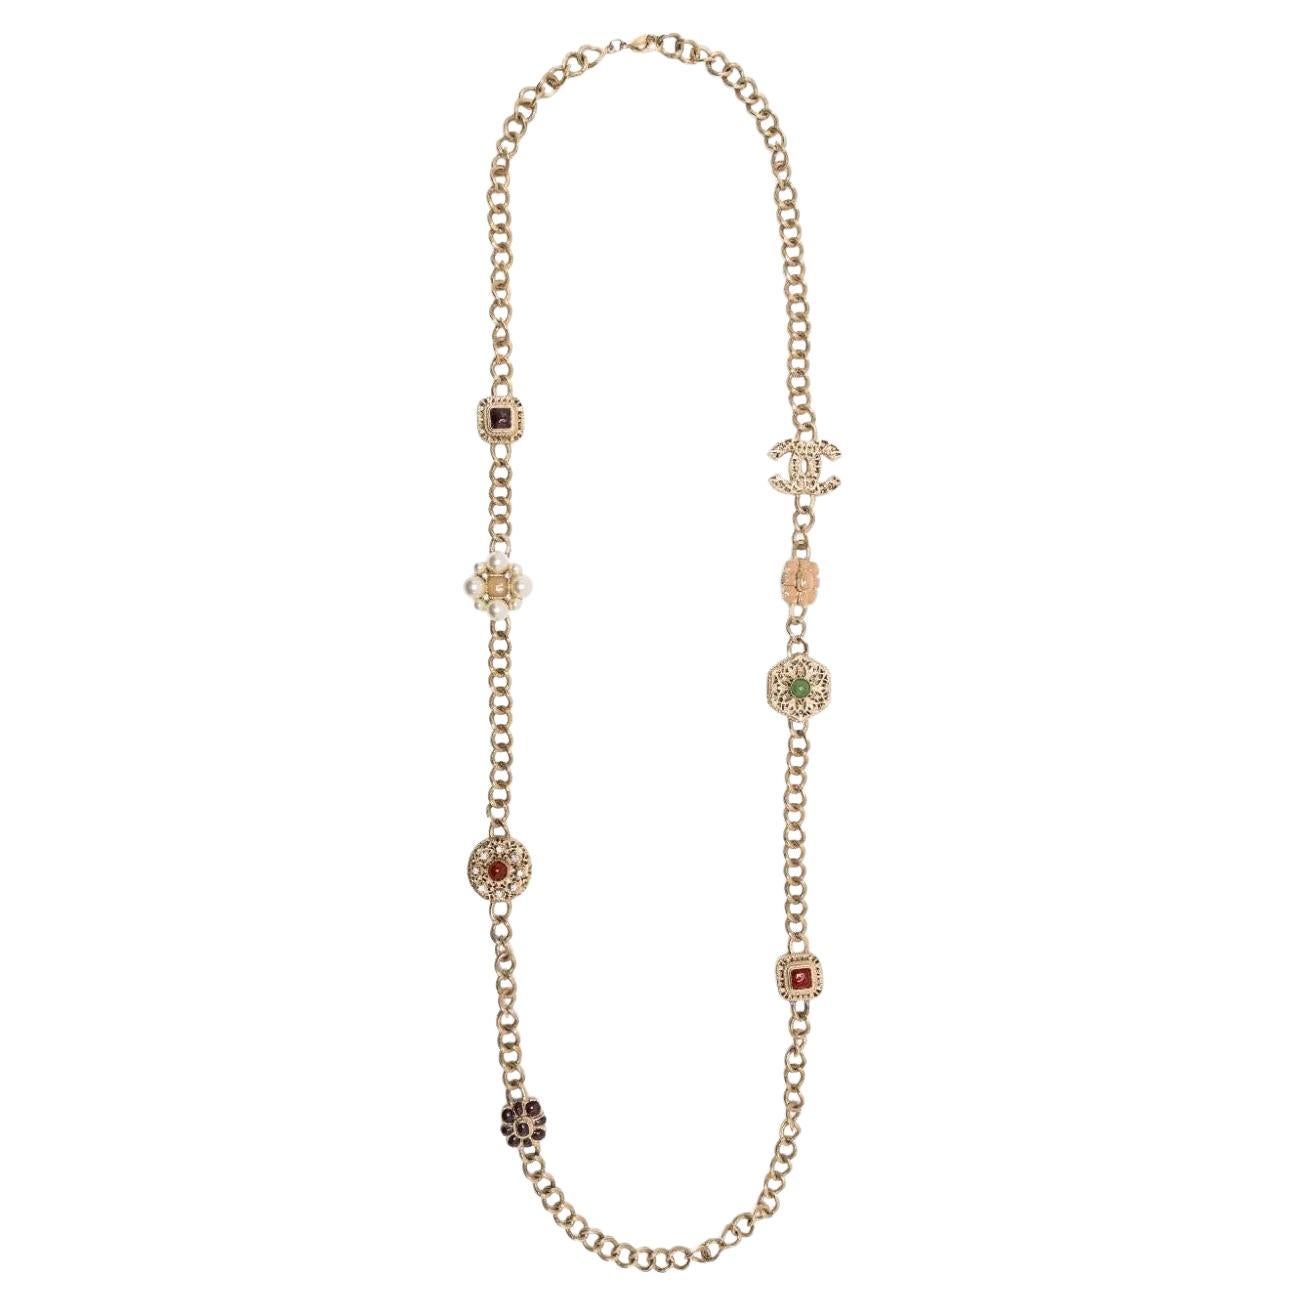 Chanel CC chain necklace